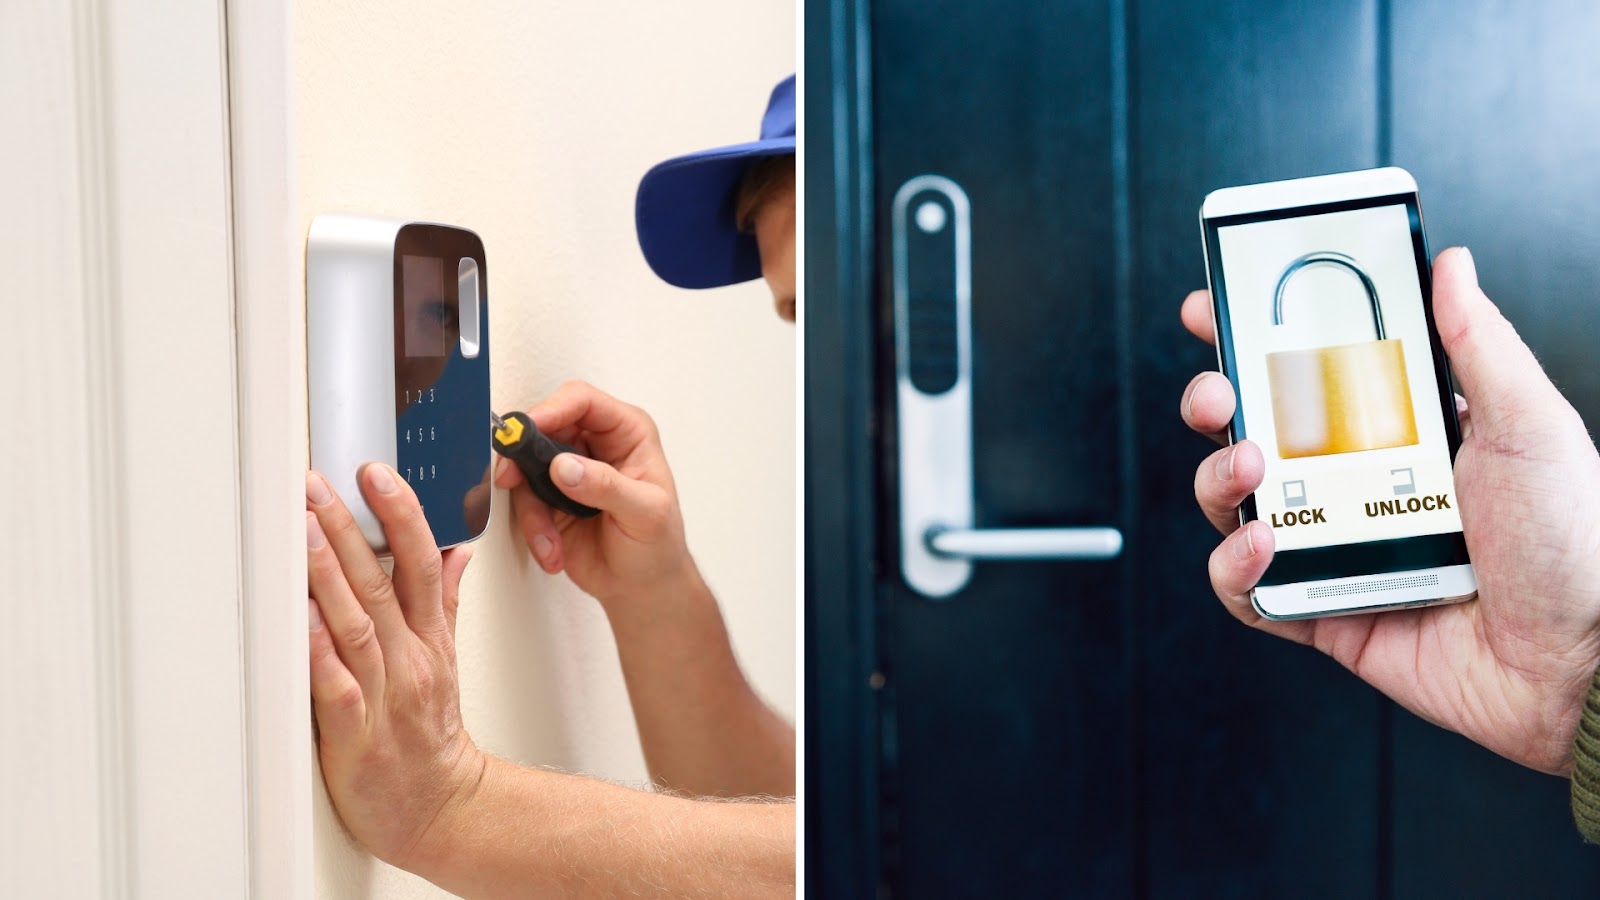 On the left: a technician installing an alarm lock

On the right: A user unlocking an alarm lock using a smartphone app